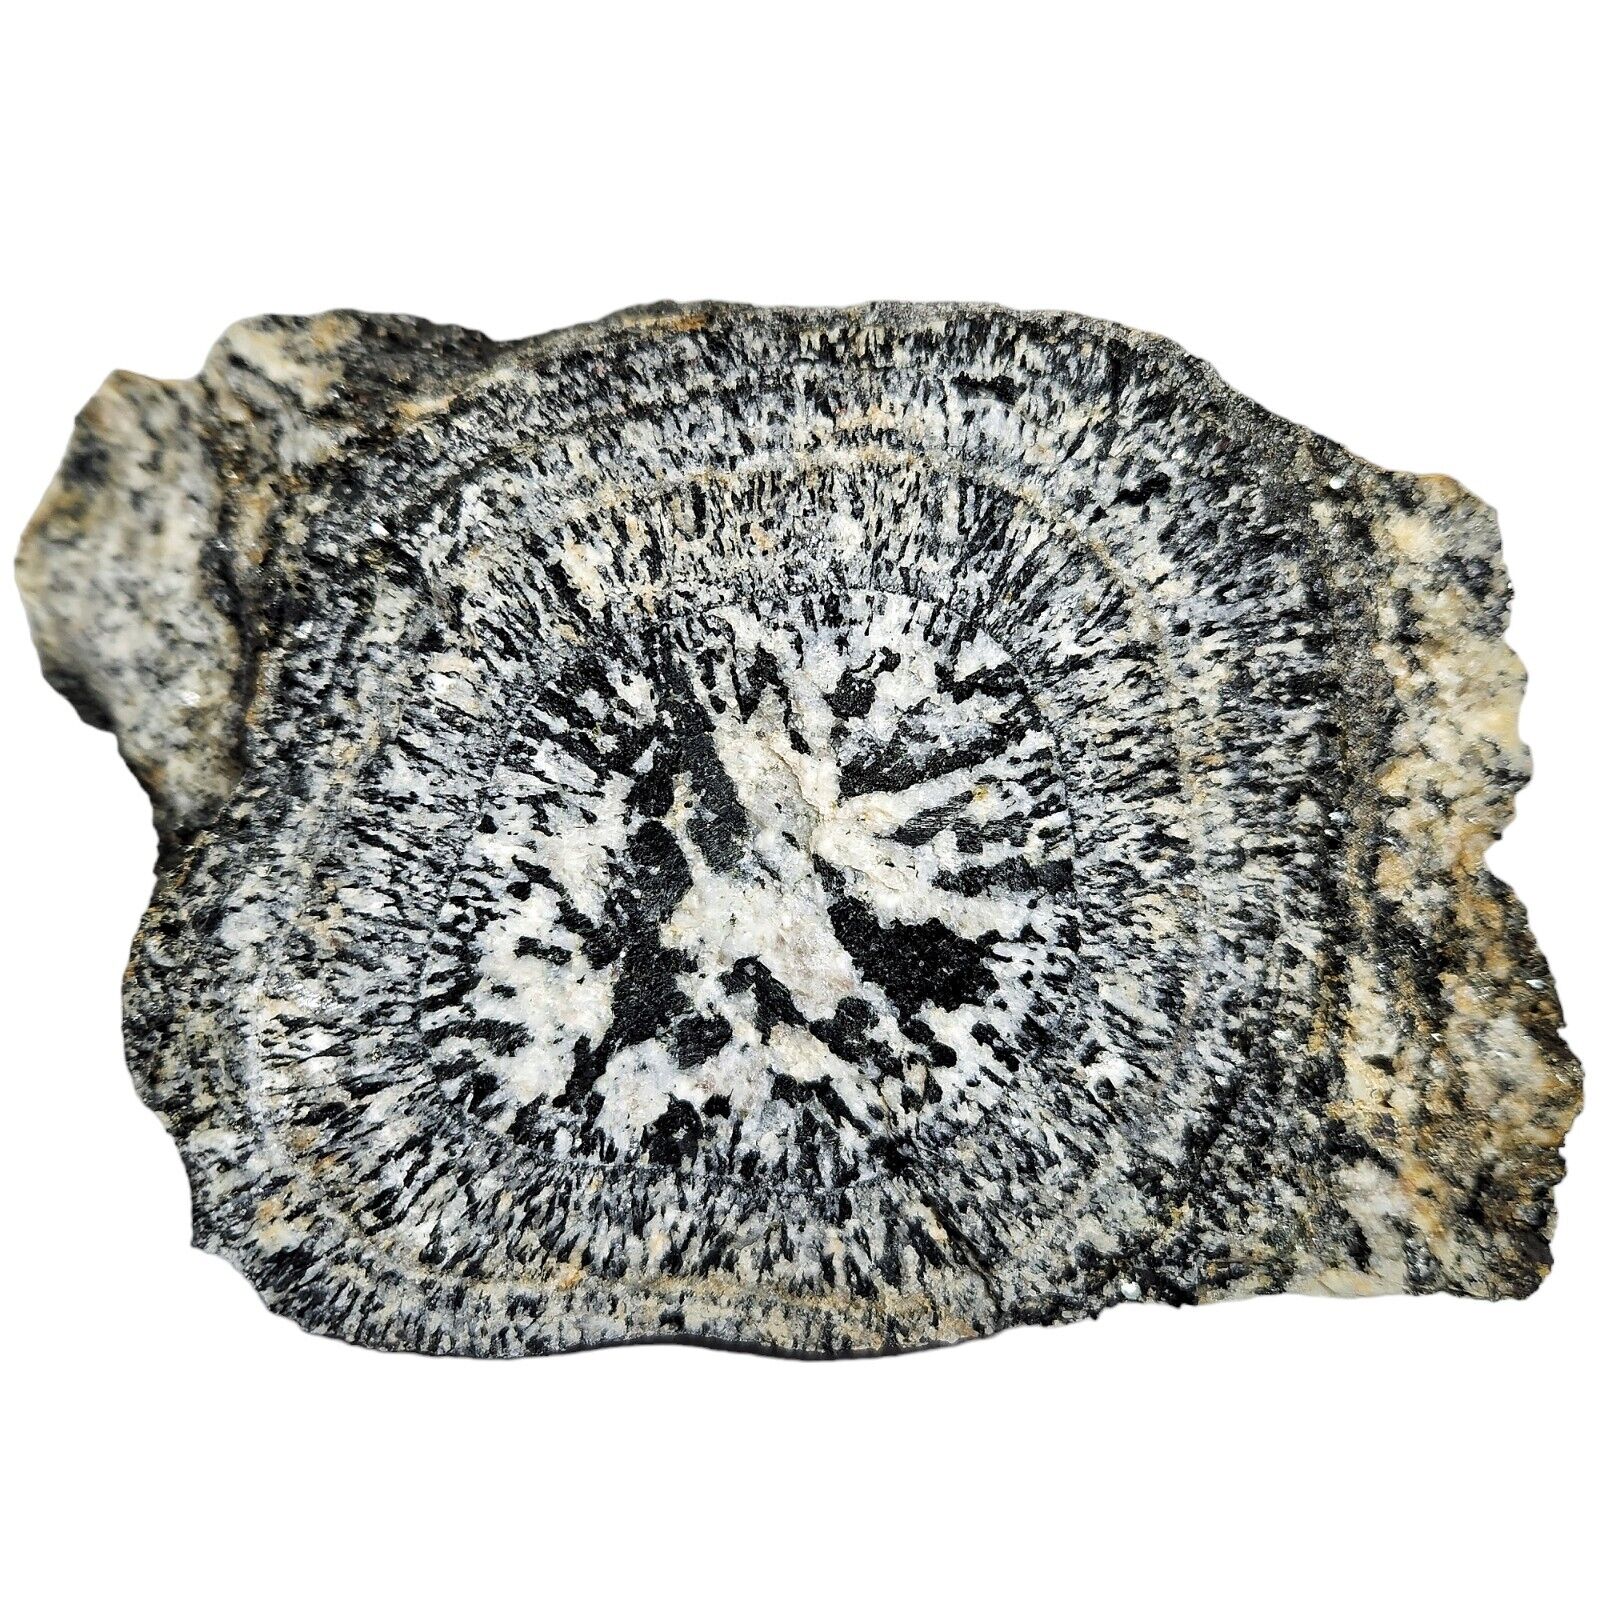 RARE Orbicular Granite Half, 2.7 Billion Years Old, Western Australia, 1373g